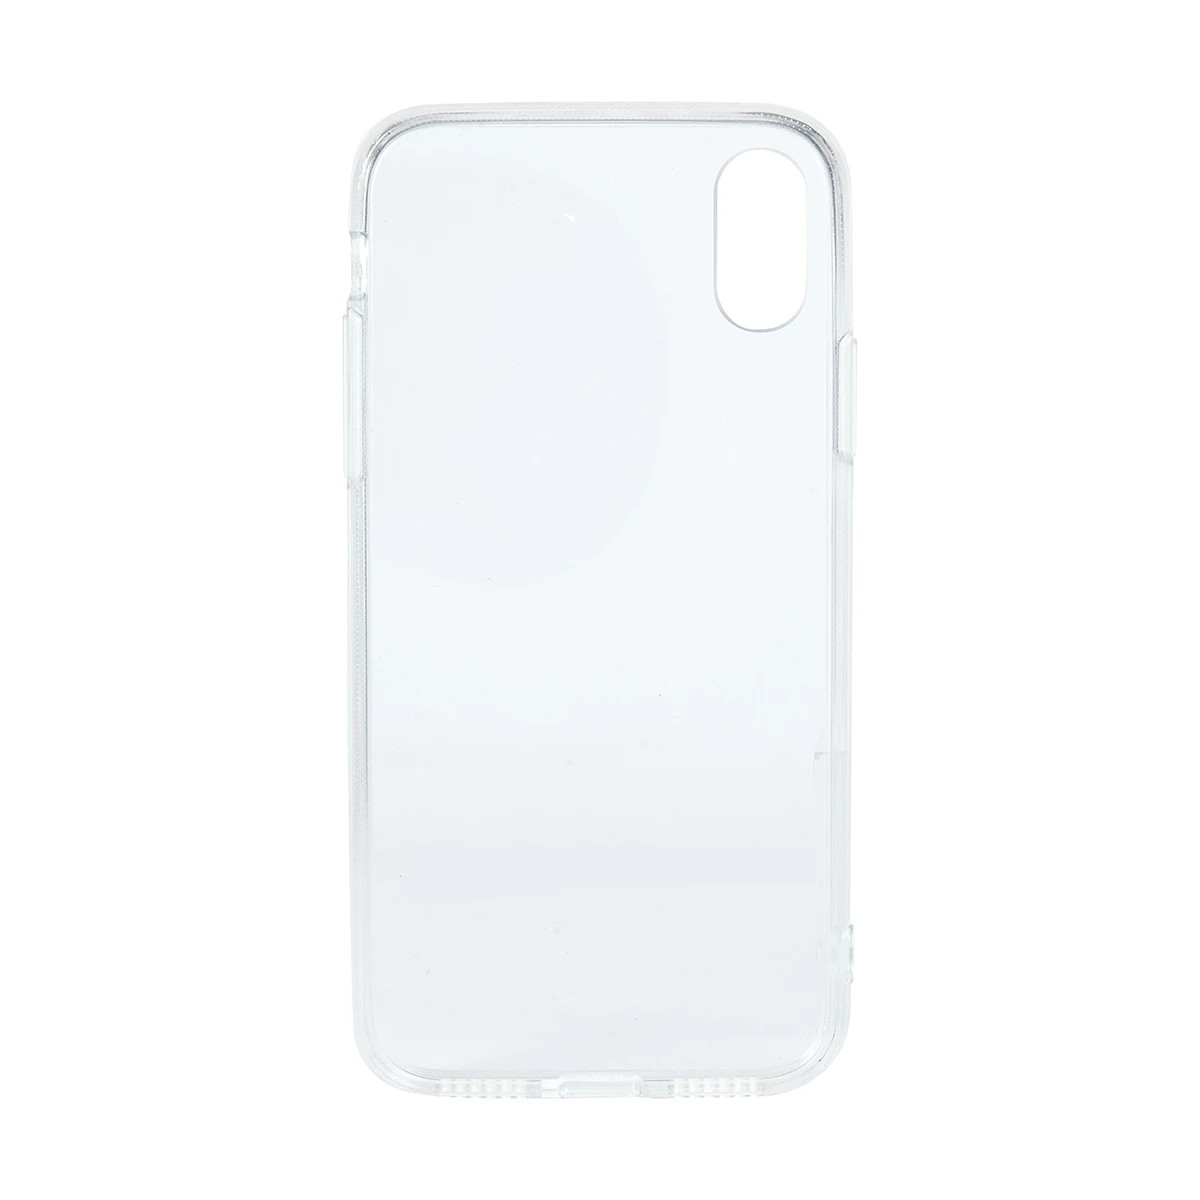 iPhone X Clear Case - Anko | Target Australia